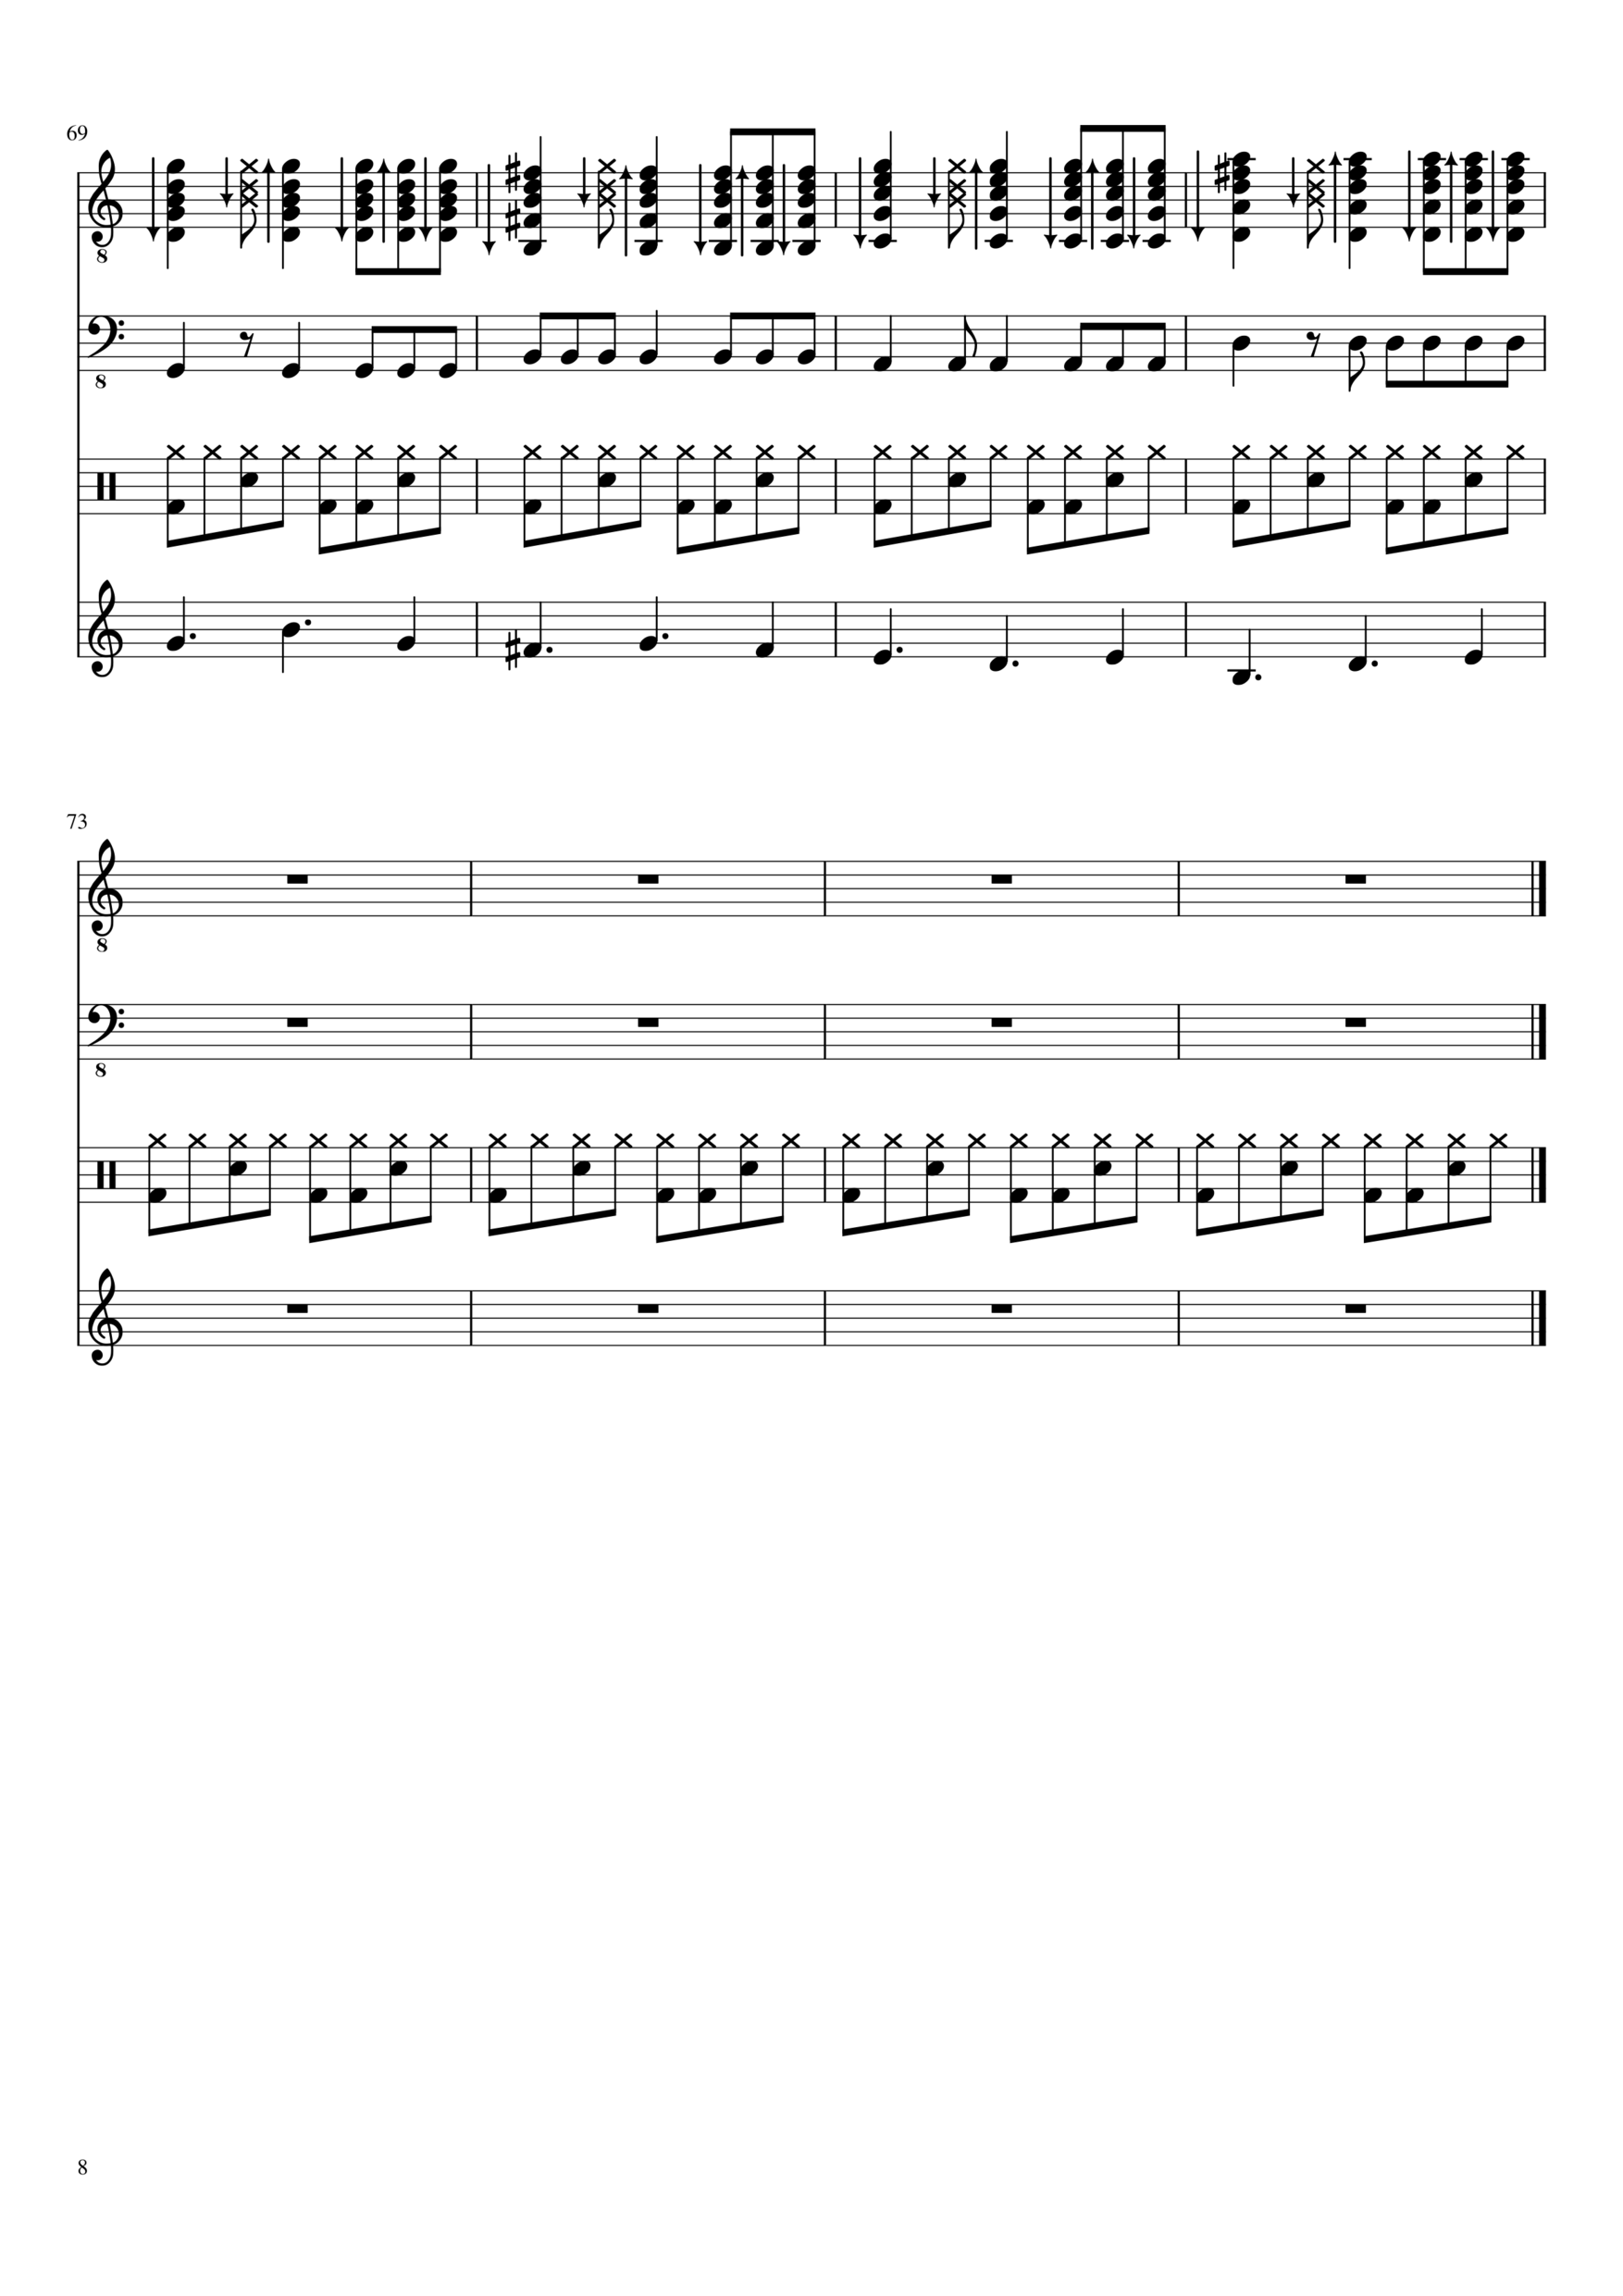 Skvoz dyiru v moey golove slide, Image 8